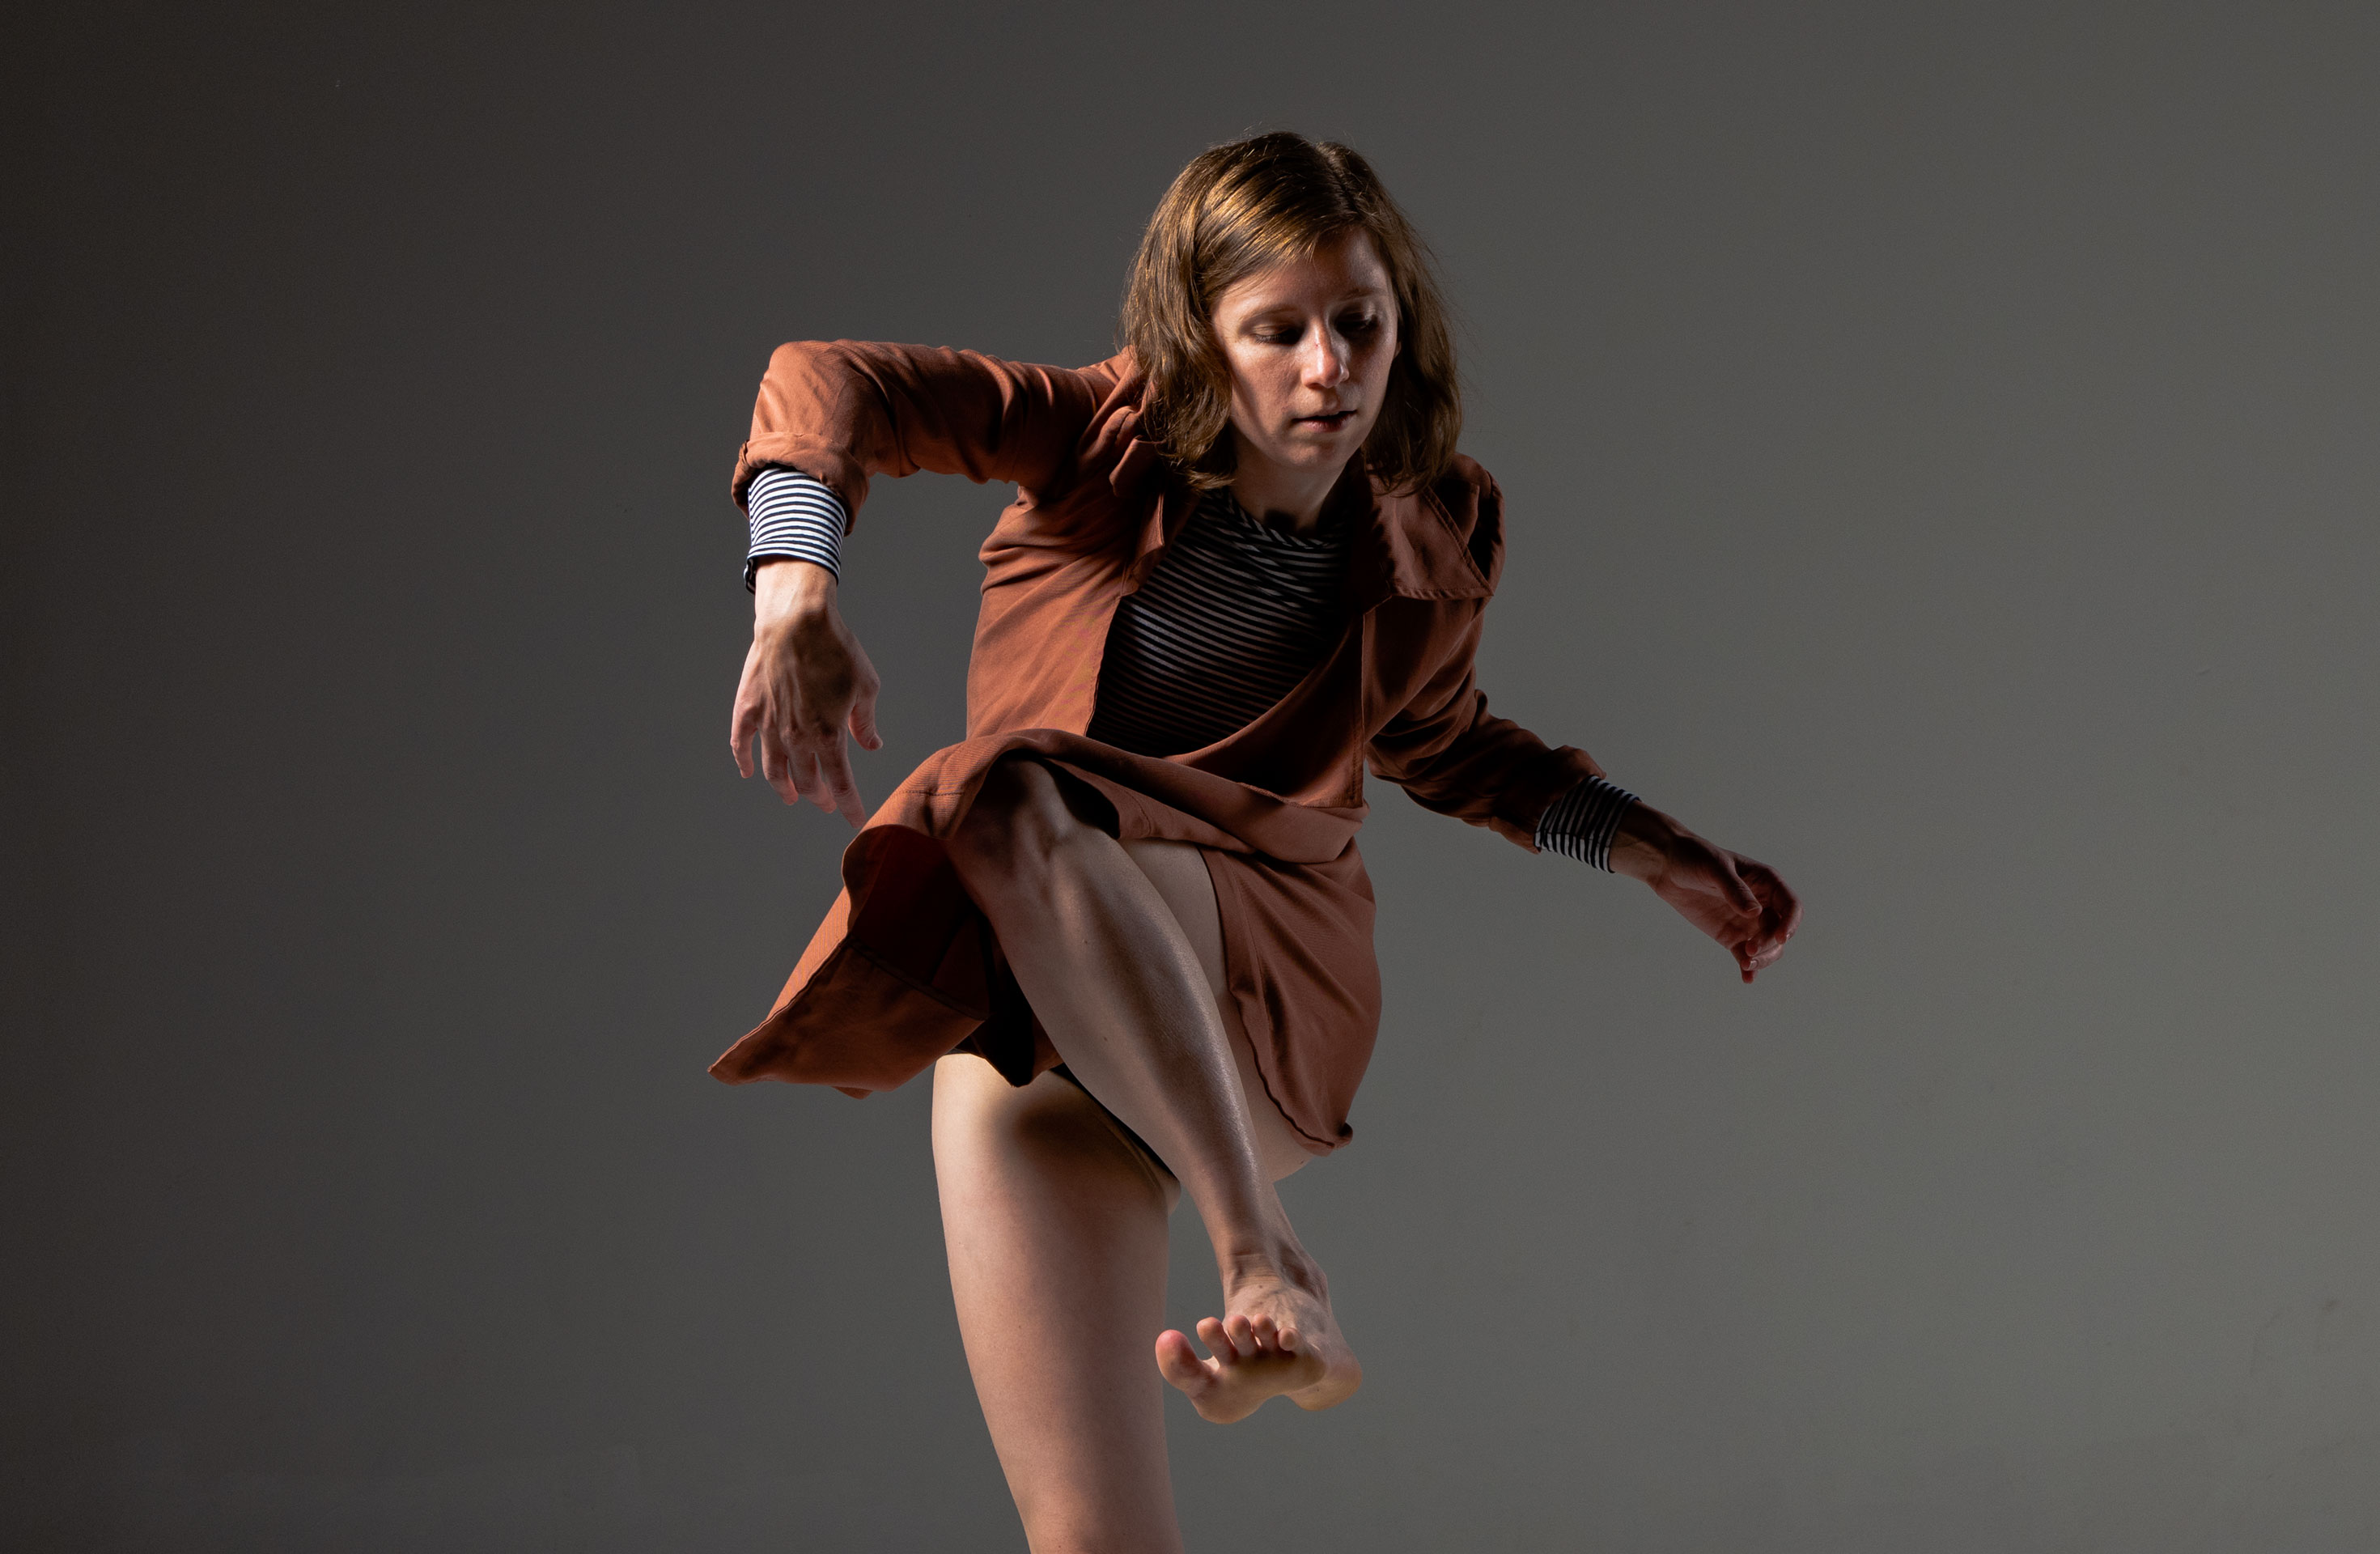 push/FOLD dancer Briley Jozwiak lifts up a gestural leg in an orange jacket at Cobalt Studios in Portland, Oregon | Photography: Jingzi Zhao